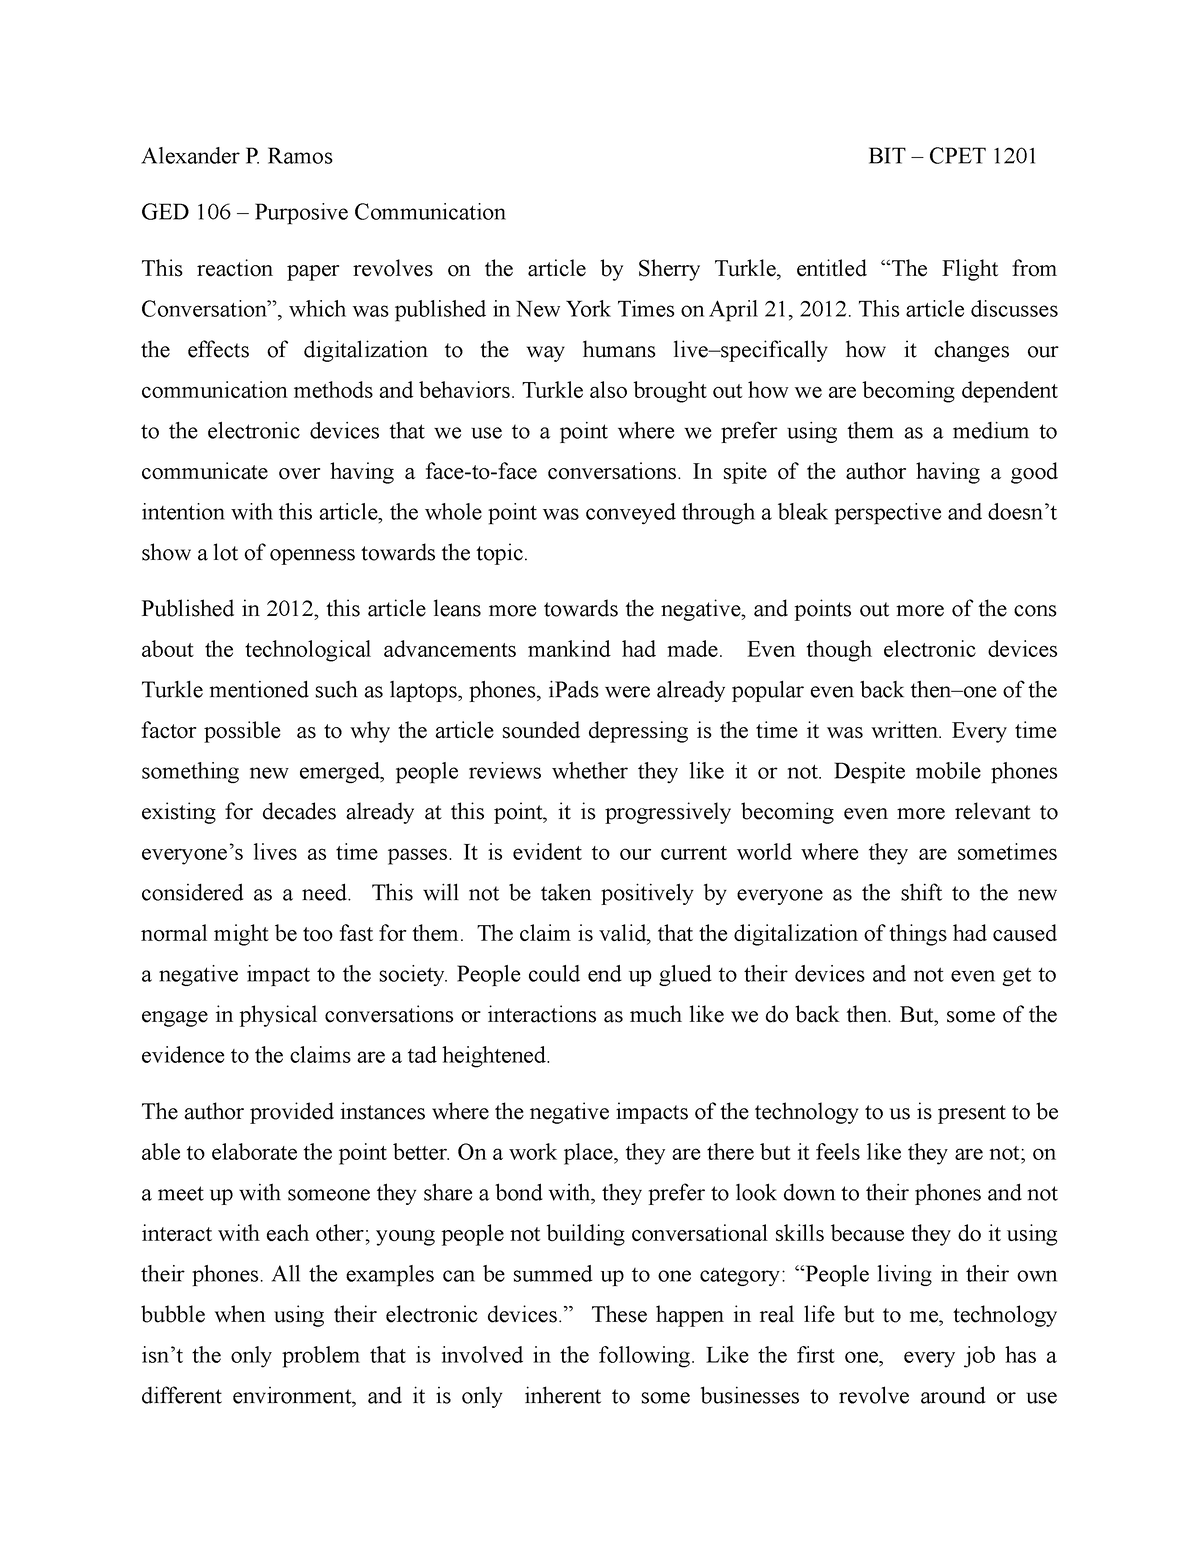 Reaction Paper - PE EDUCATION - Alexander P. Ramos BIT – CPET 1201 GED ...